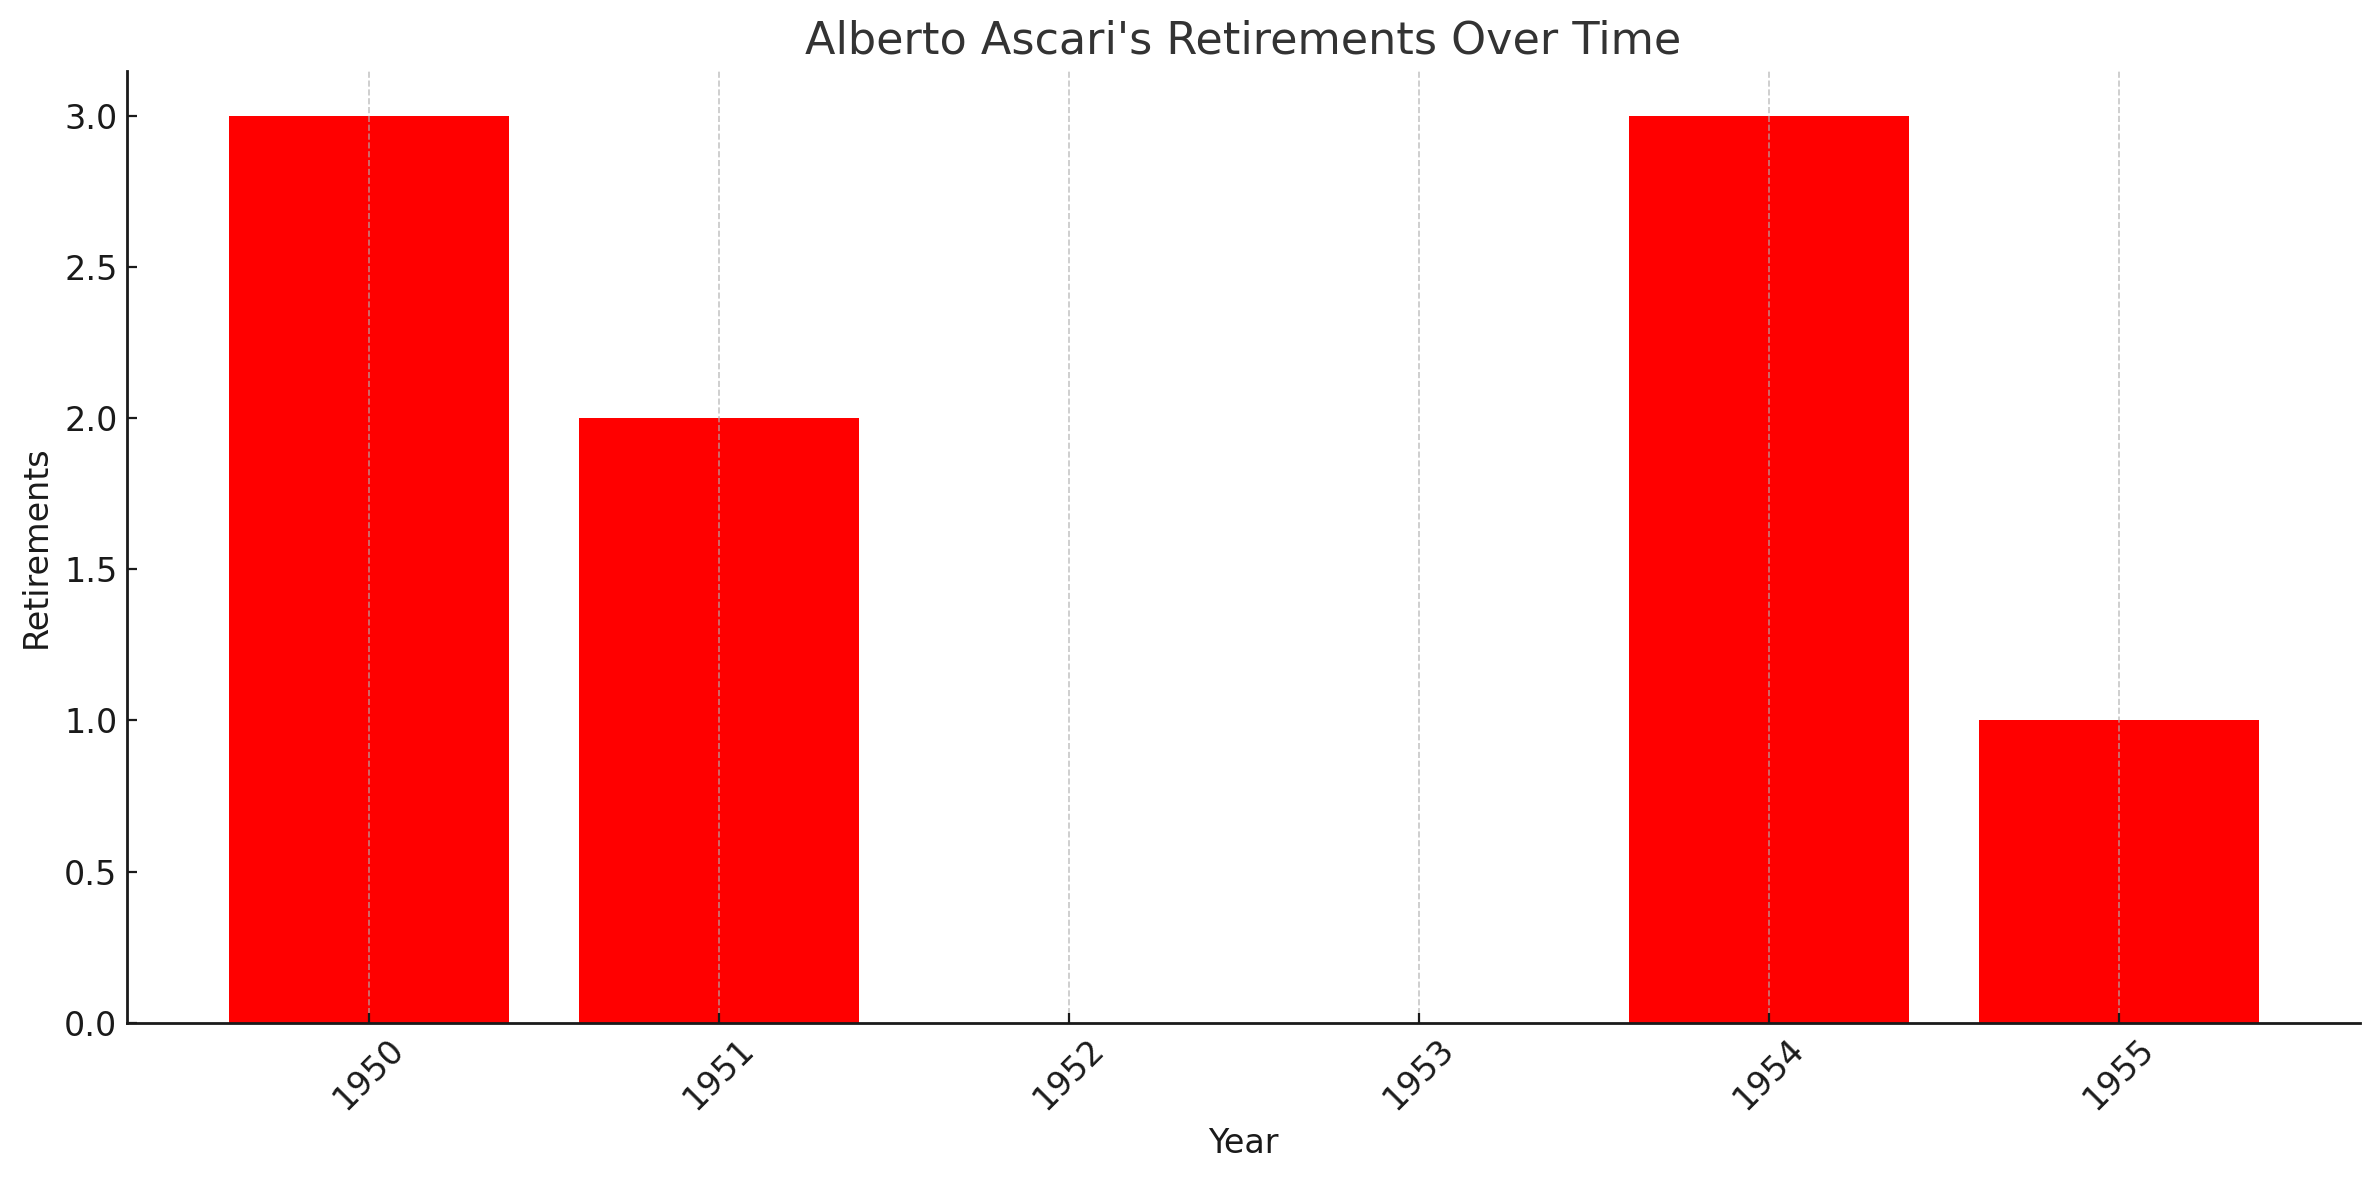 Alberto Ascari retirements